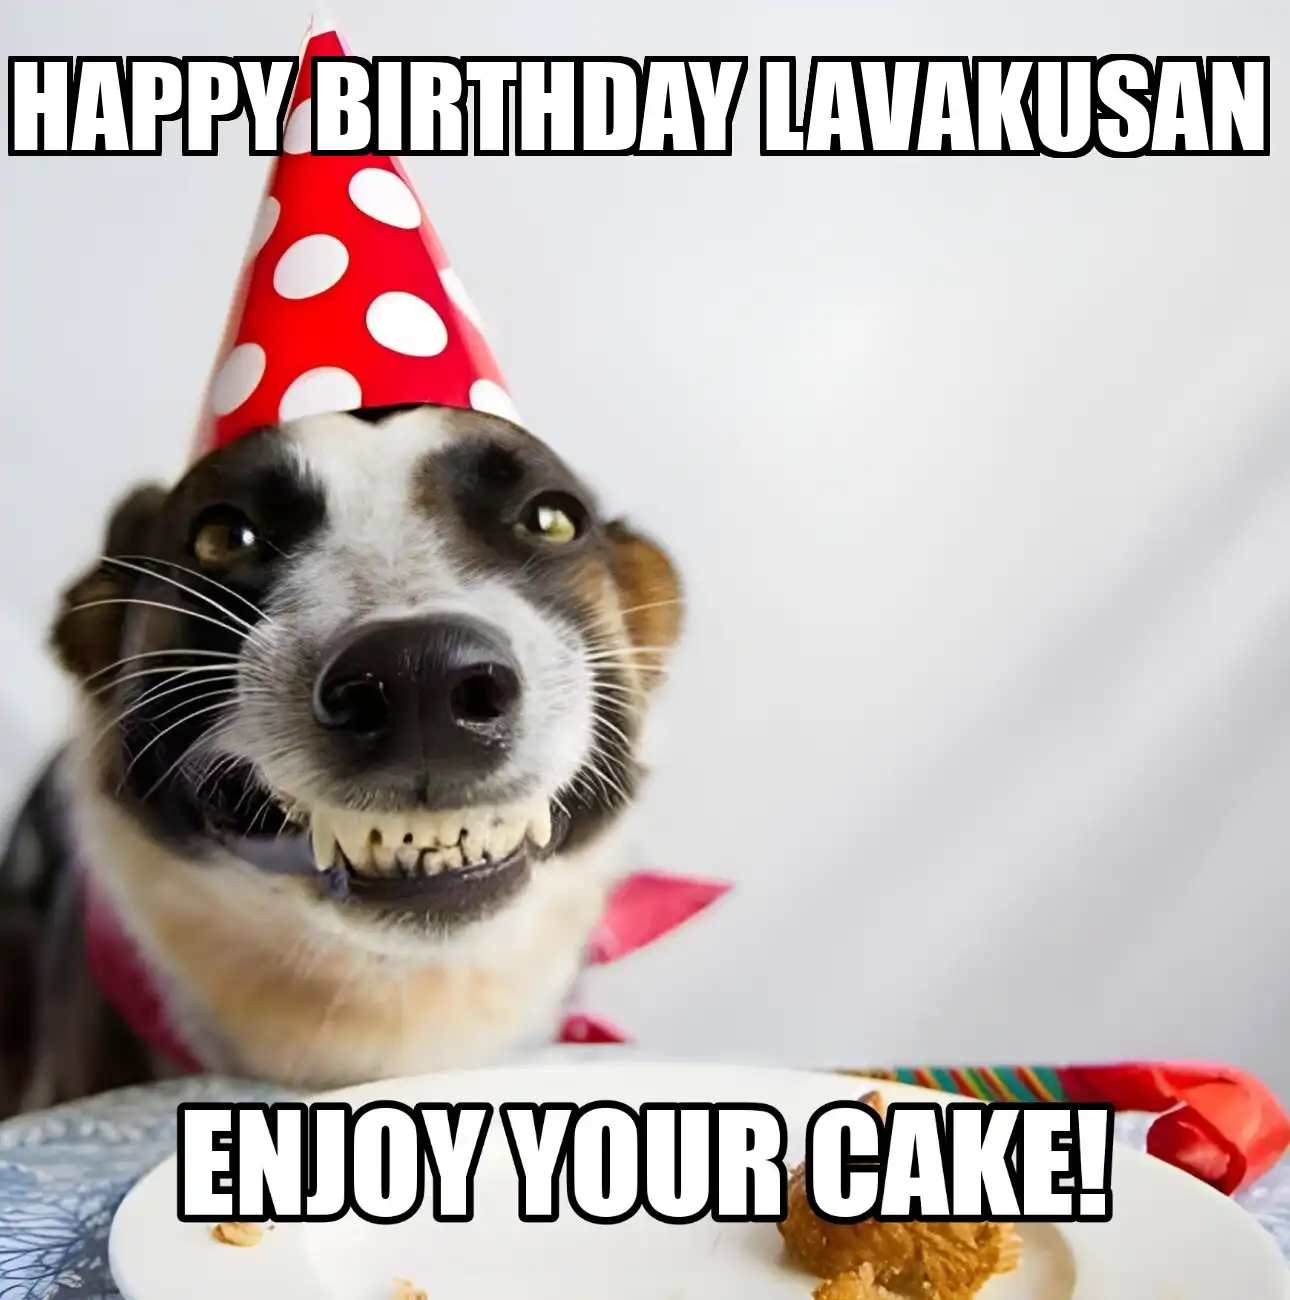 Happy Birthday Lavakusan Enjoy Your Cake Dog Meme